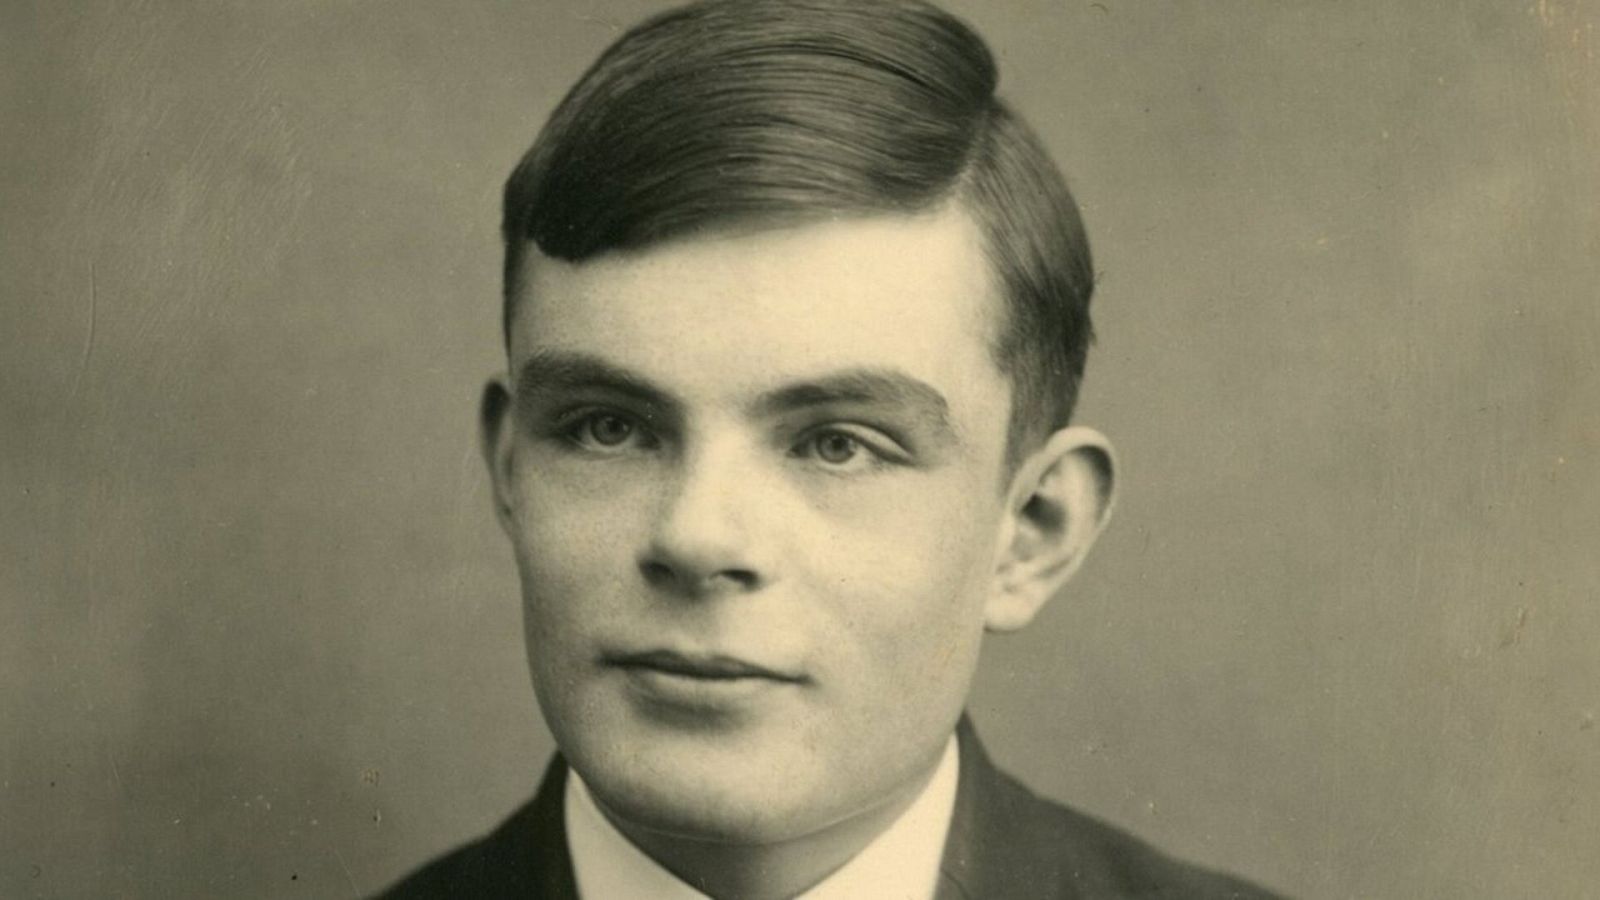 Órbita Laika - Curiosidades científicas - El Test de Turing